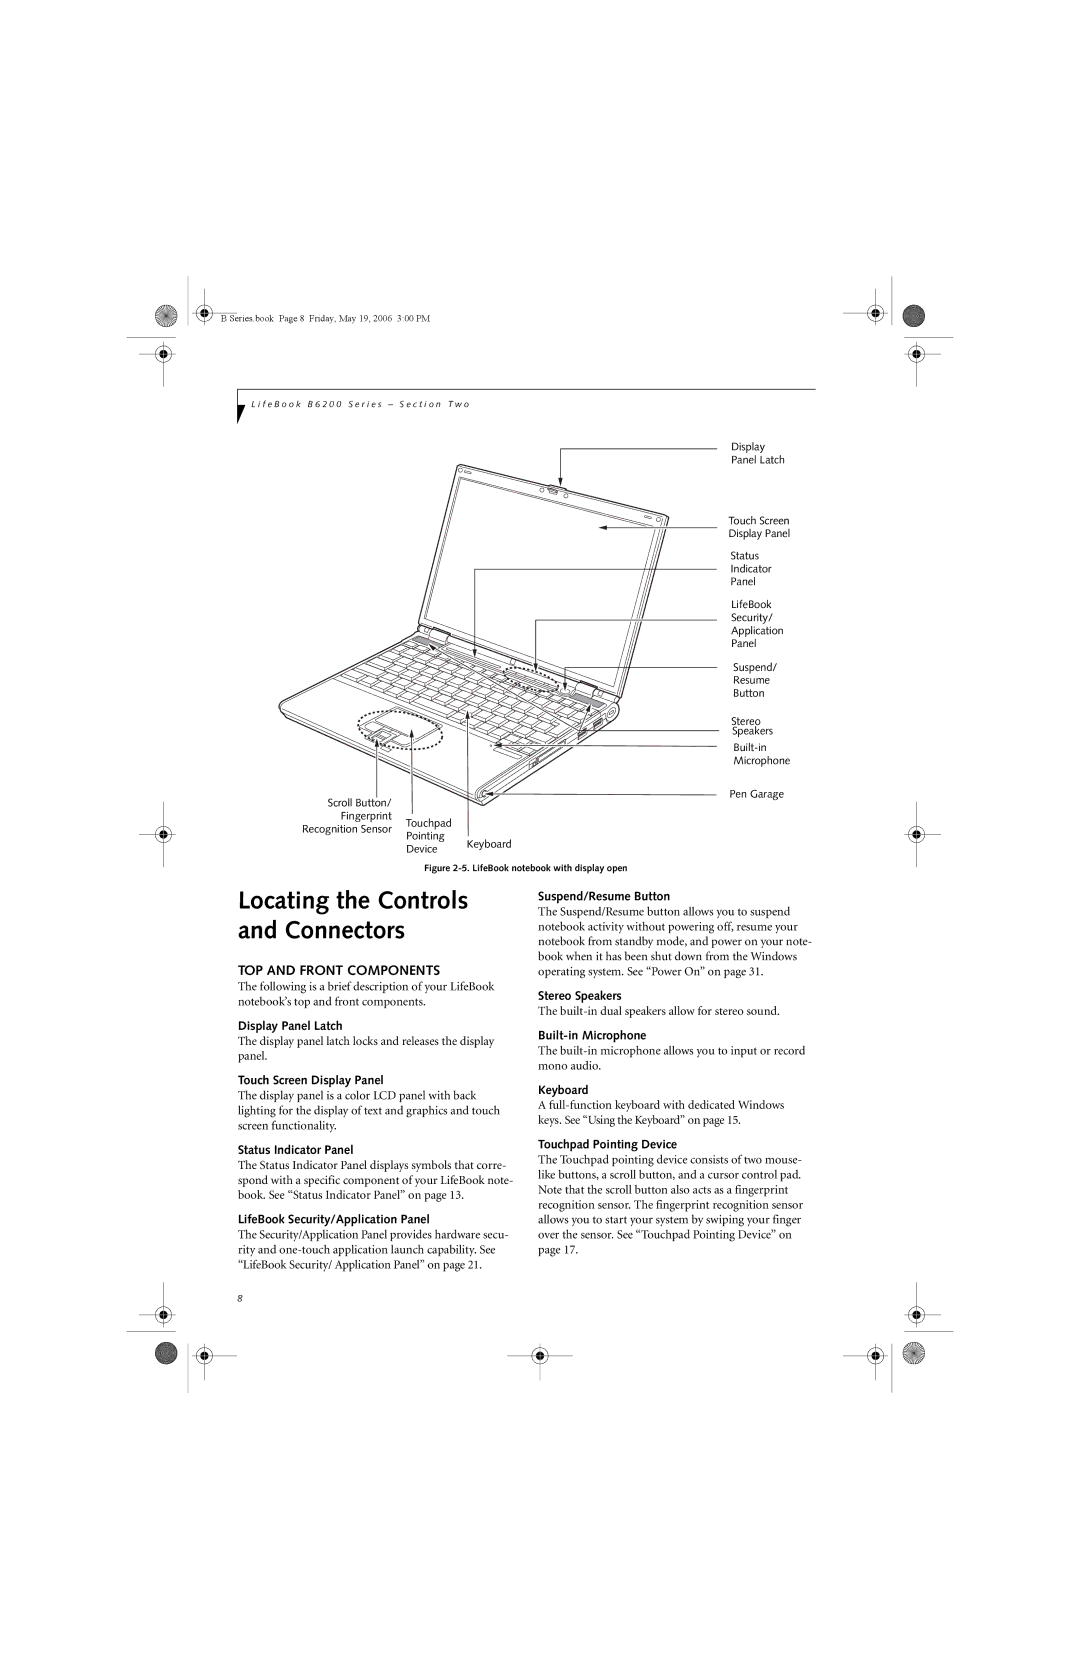 Fujitsu Siemens Computers B6210 manual TOP and Front Components 